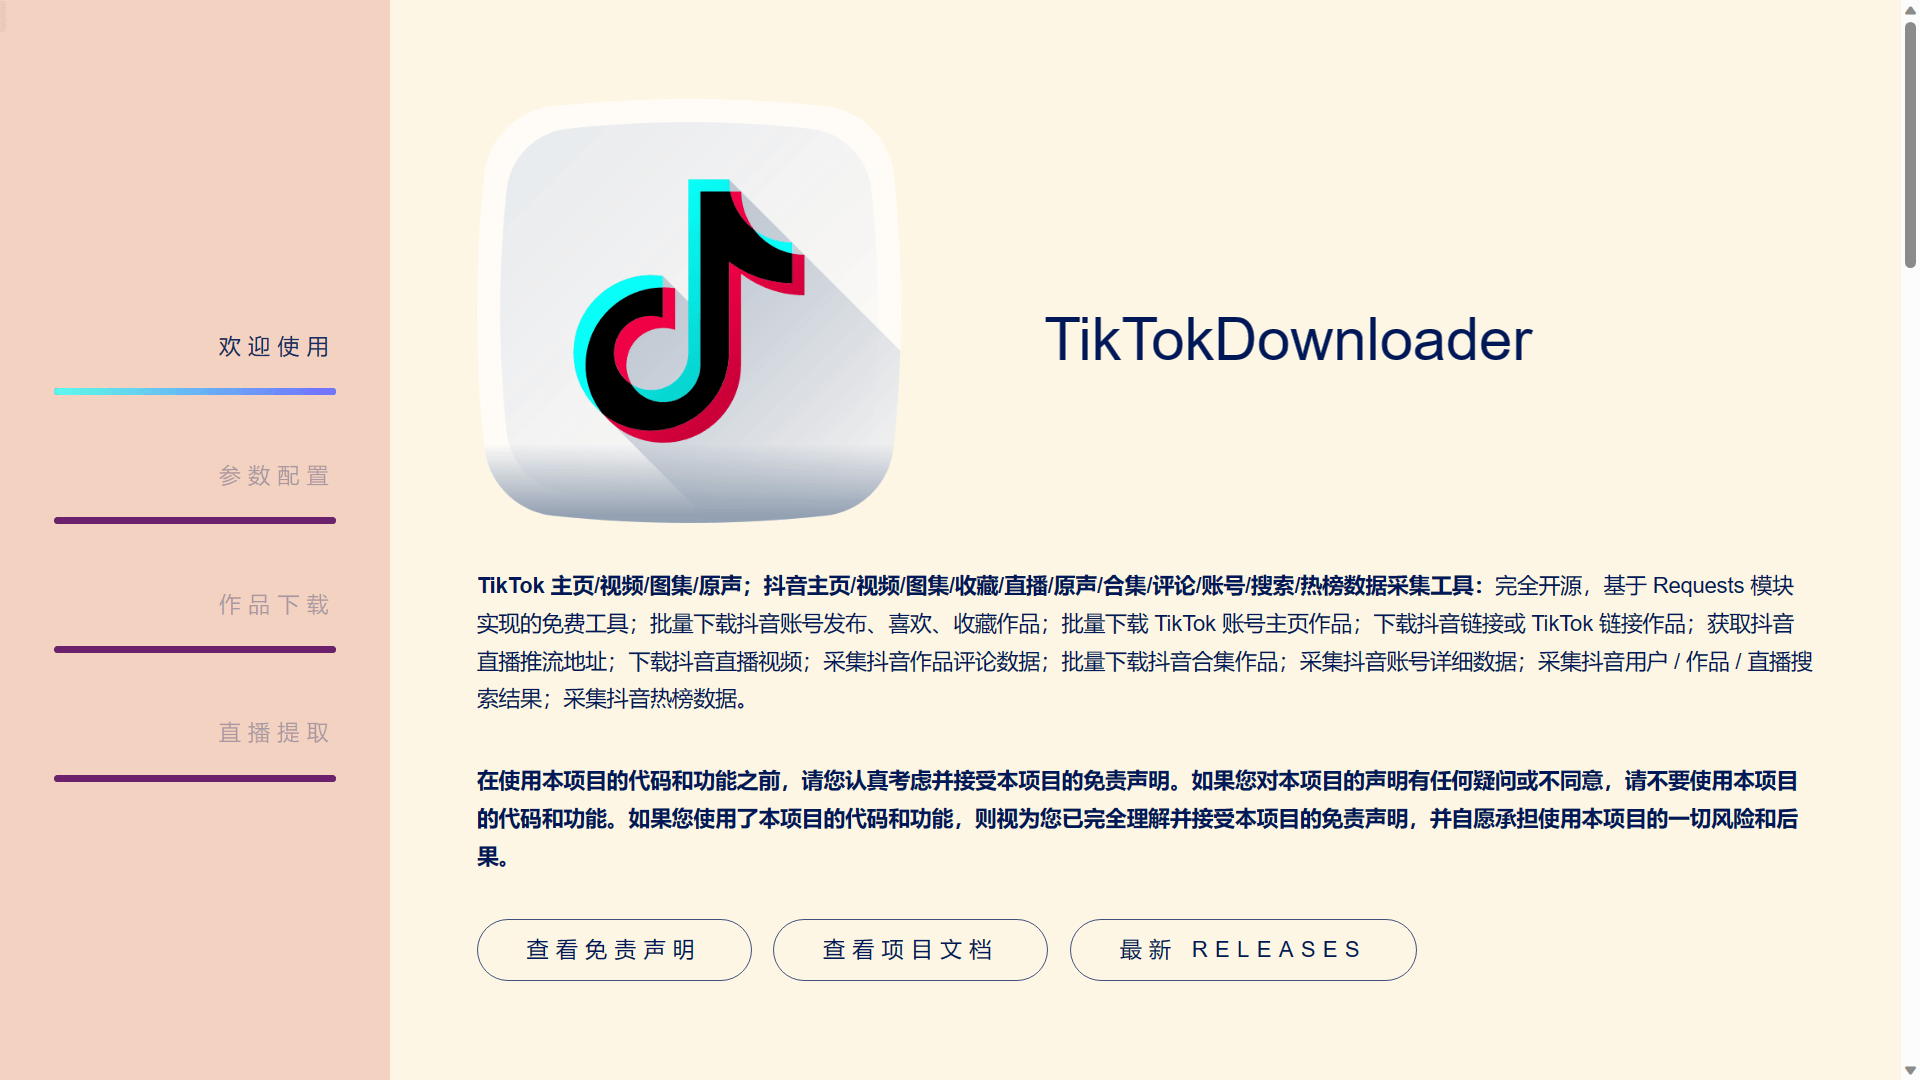 TikTokDownloader